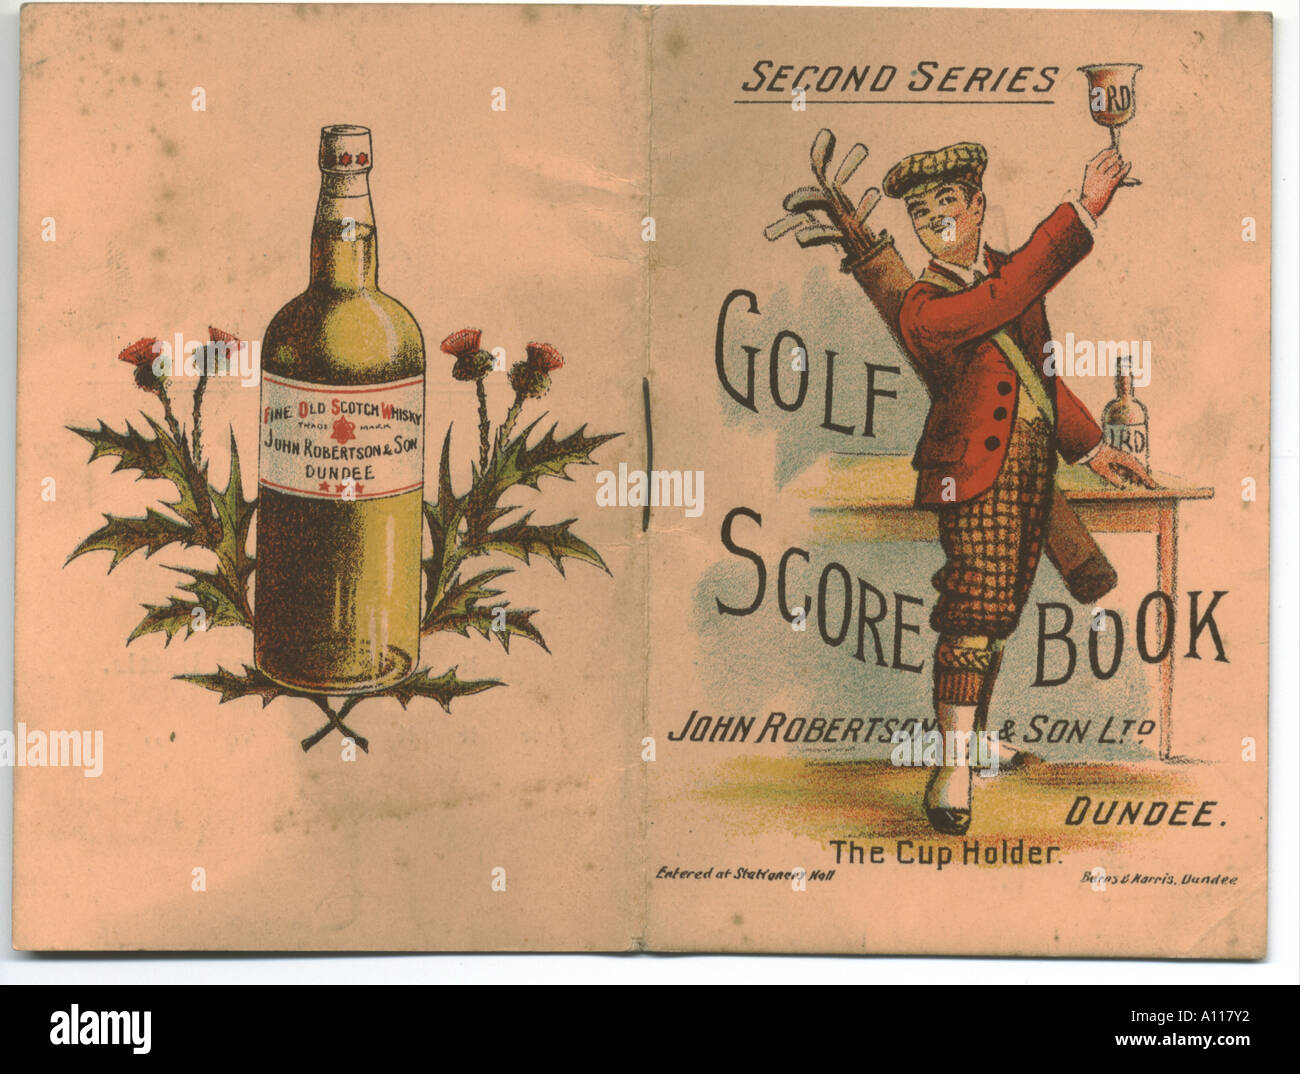 Golf Score Bucheinband um 1900 Stockfoto